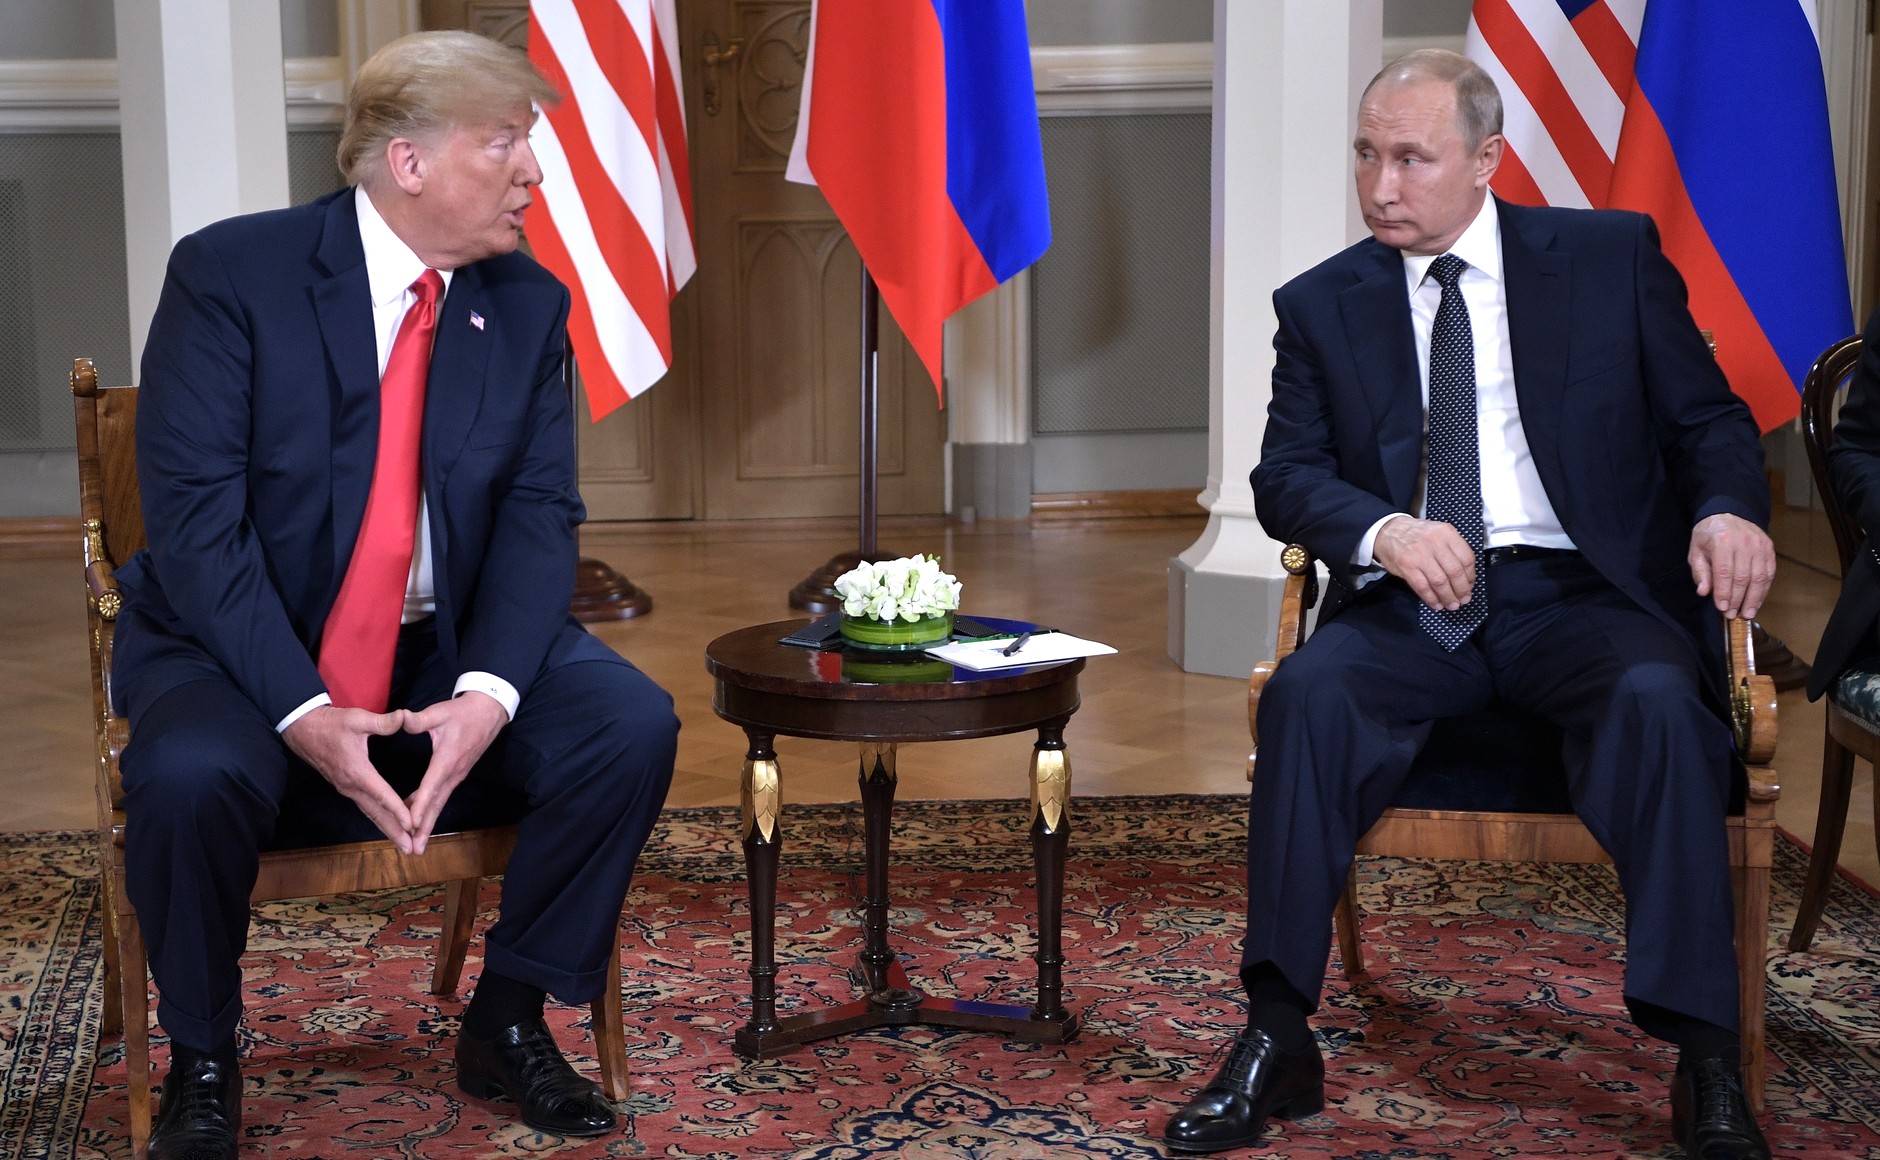 Prezydenci Rosji i USA, Władimir Putin i Donald Trump